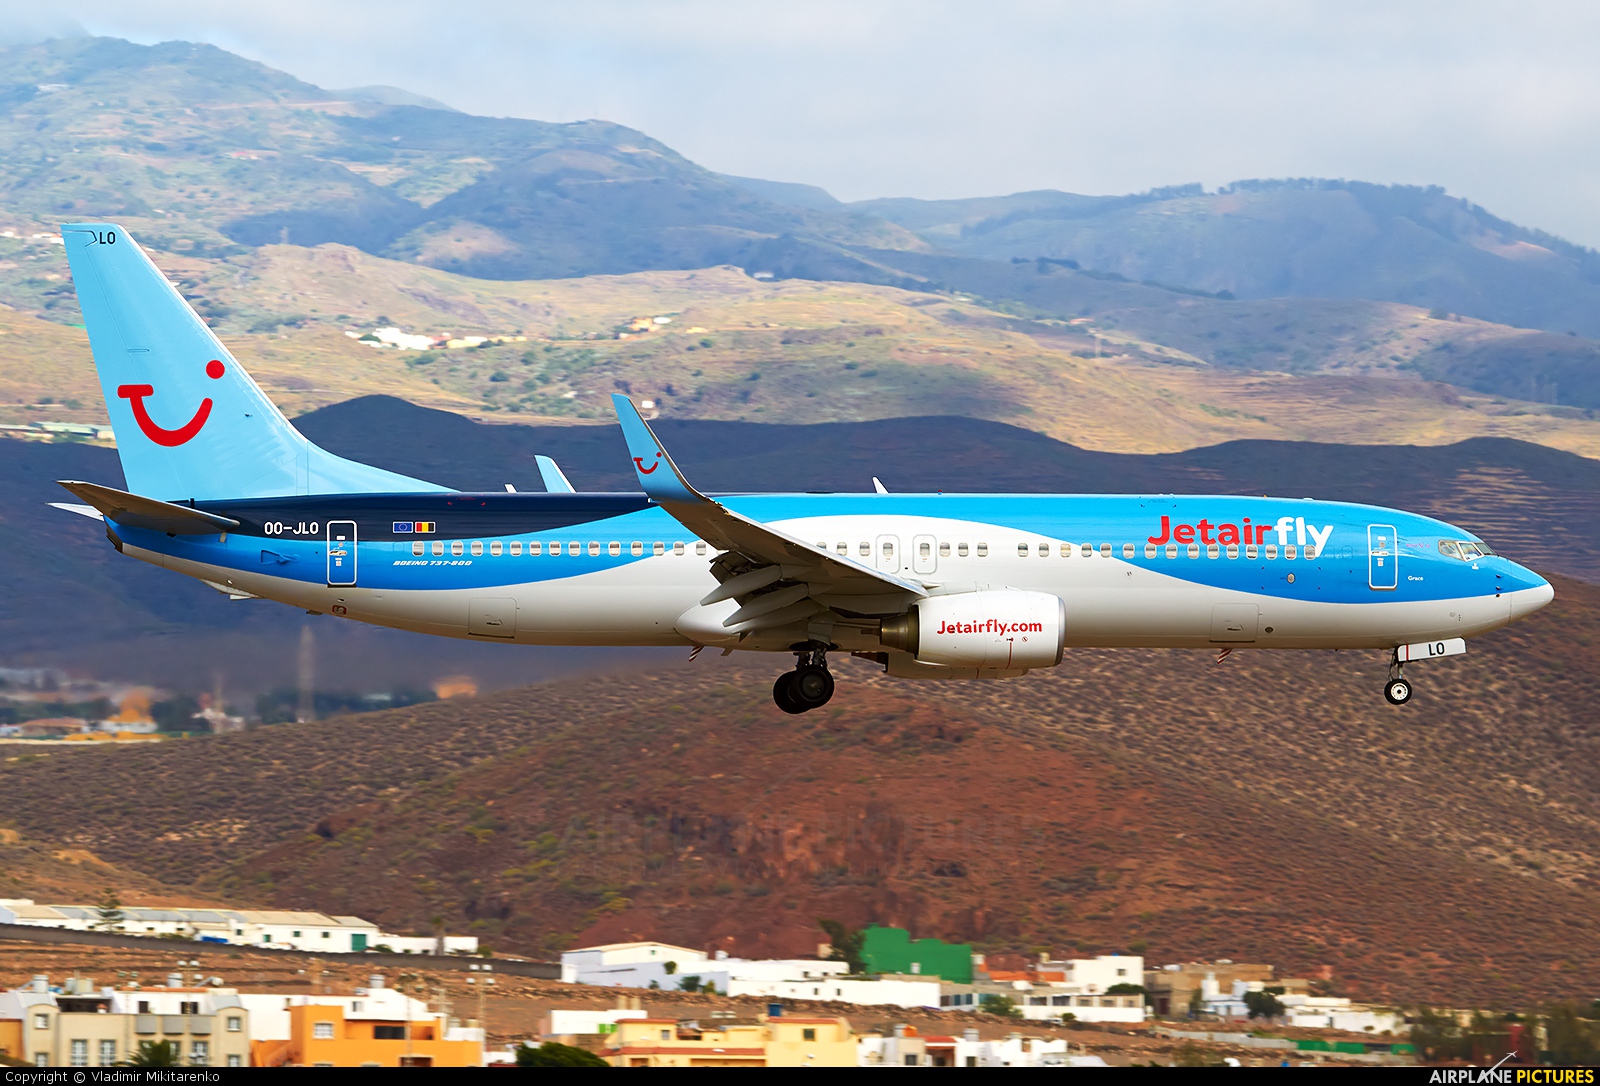 Jetairfly (TUI Airlines Belgium) OO-JLO aircraft at Las Palmas de Gran Canaria